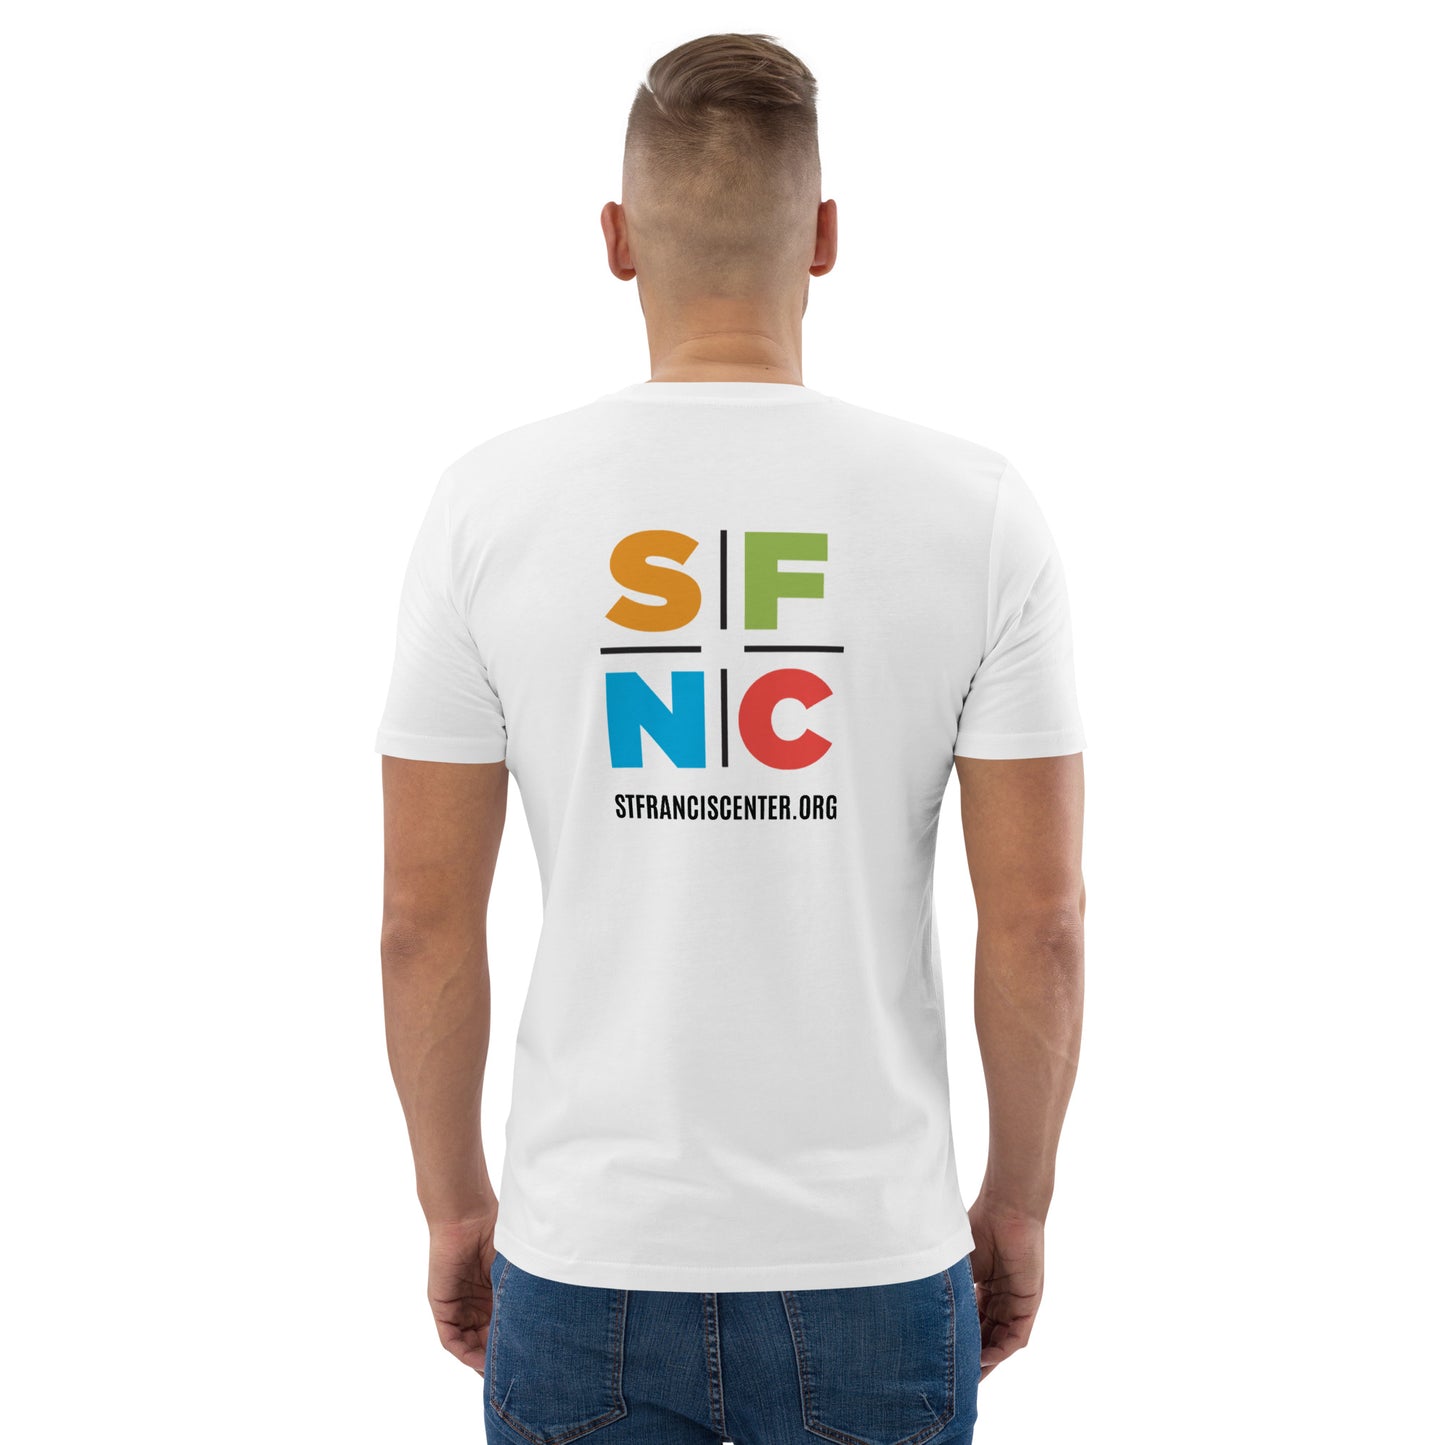 Unisex Organic Cotton SFNC T-Shirt